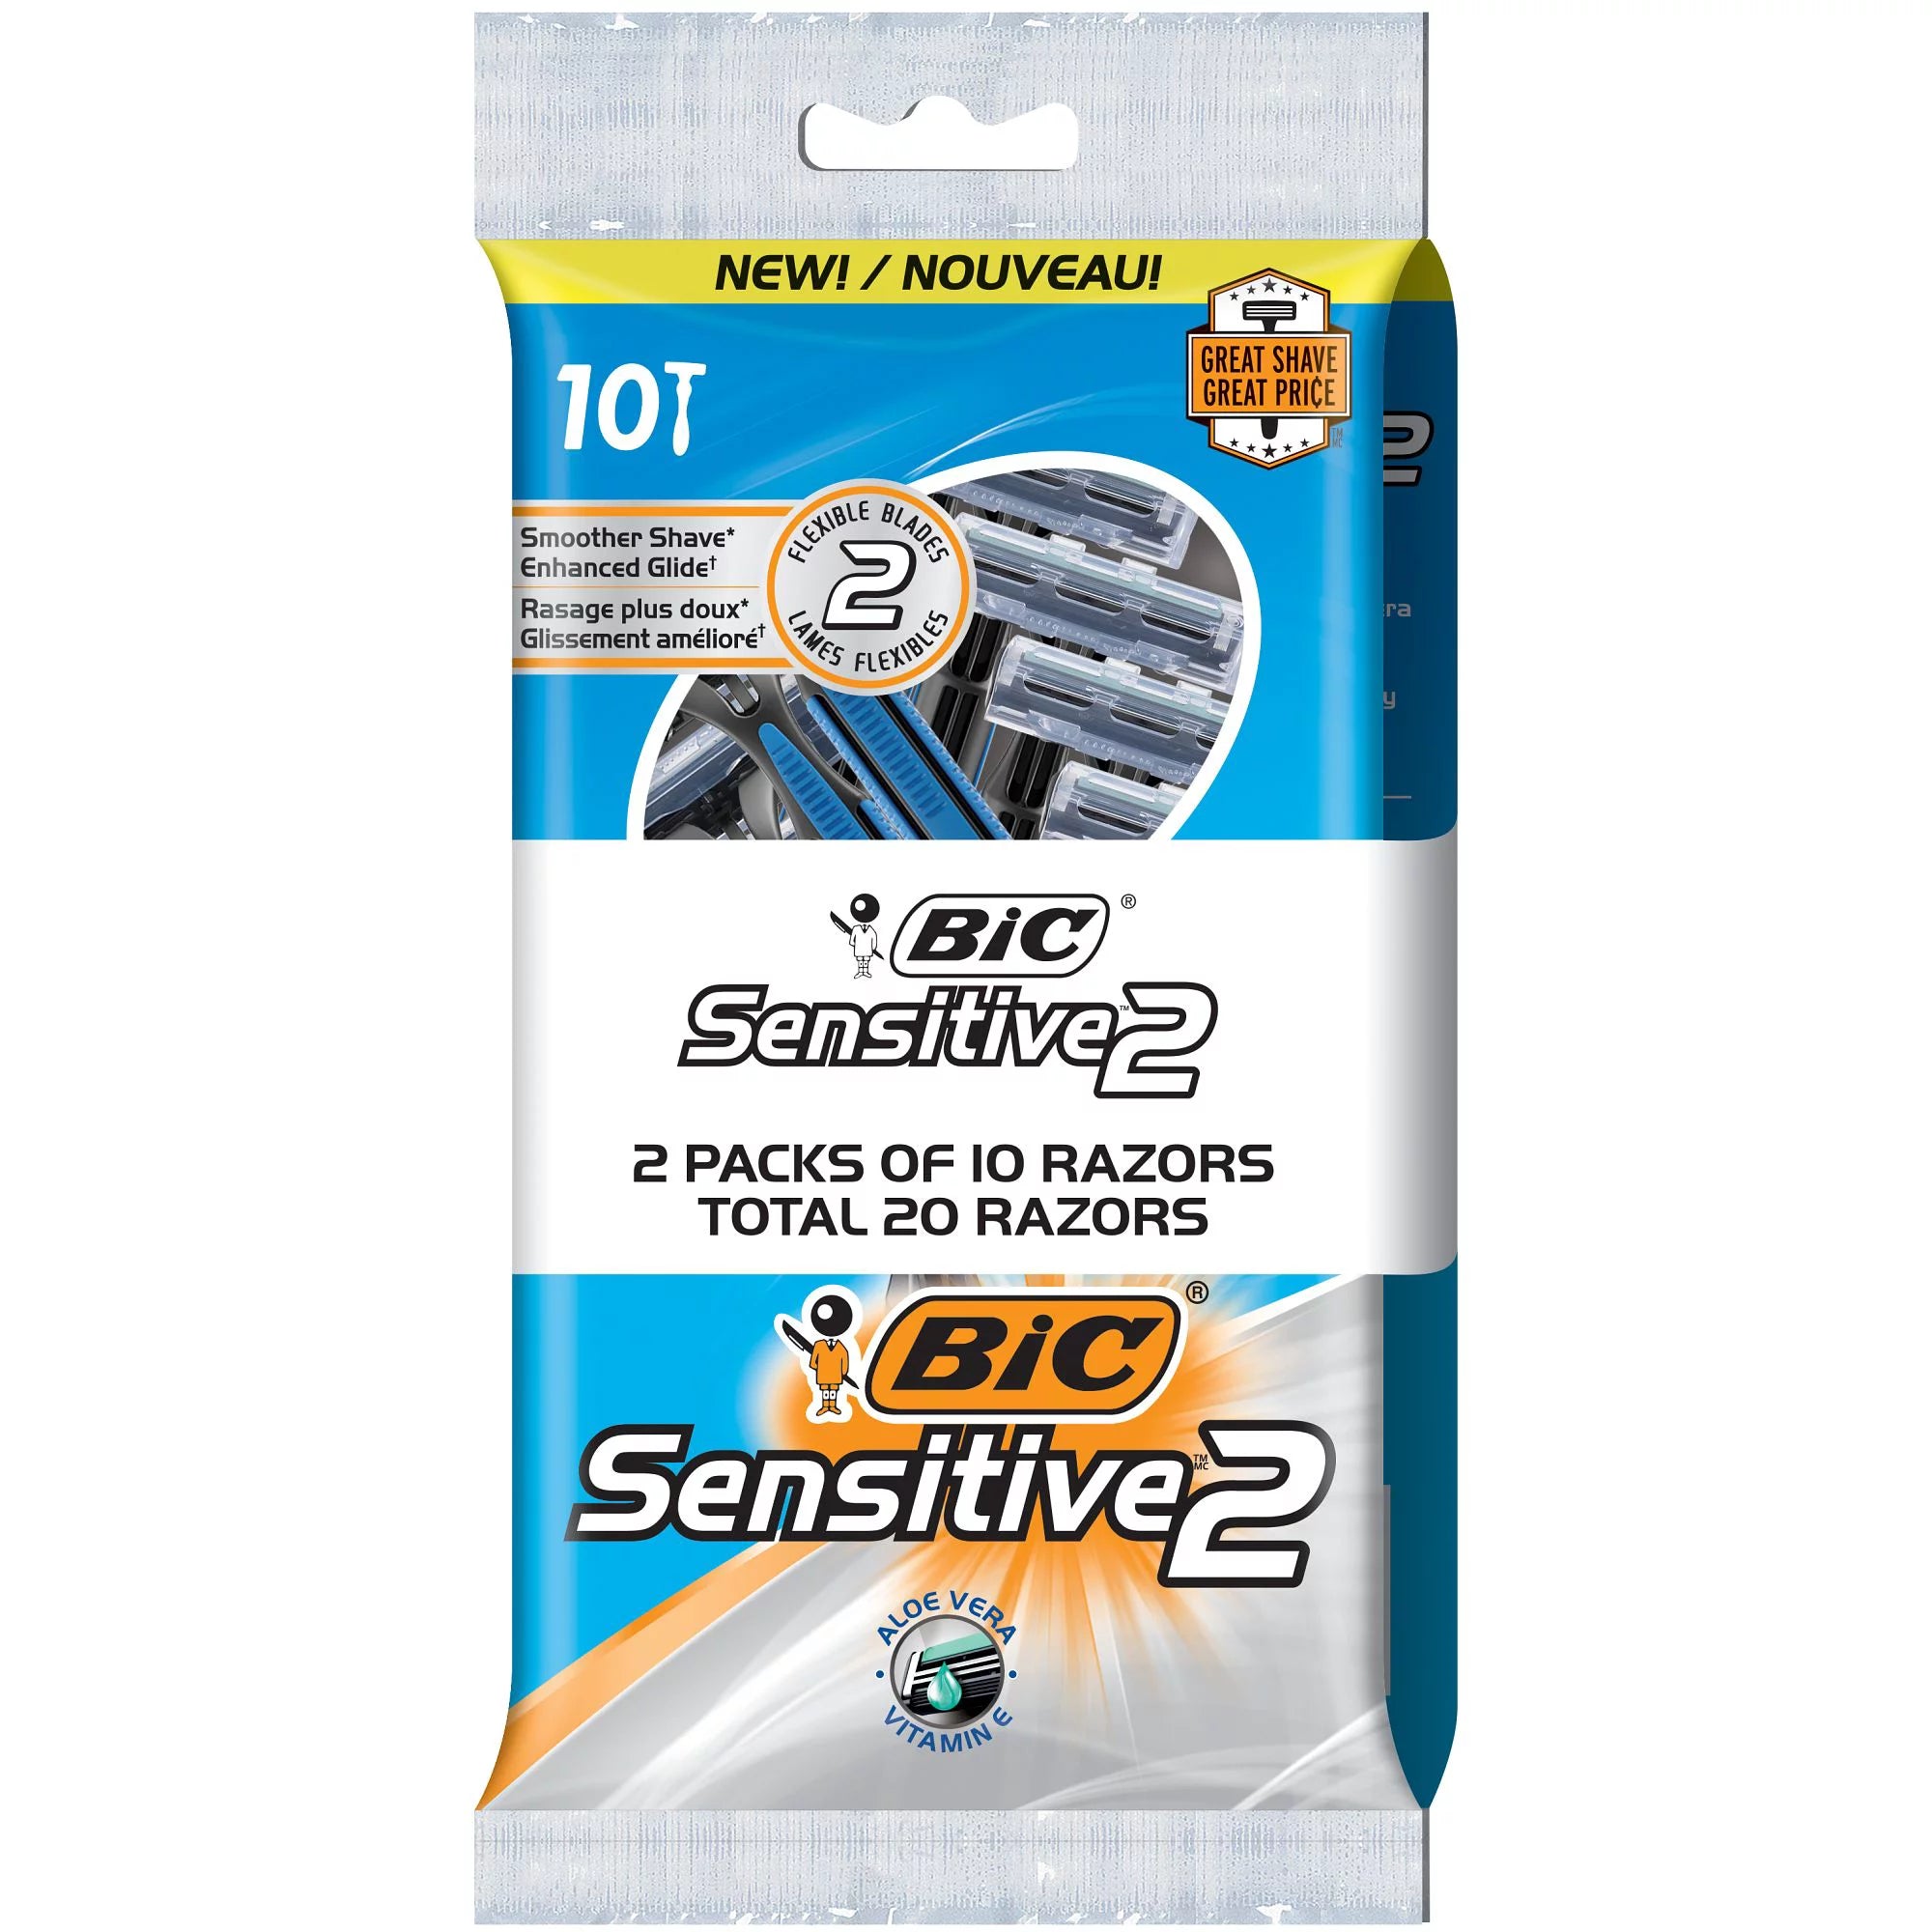 BIC Sensitive 2 Men's Disposable Razor at Best Price - Halabh